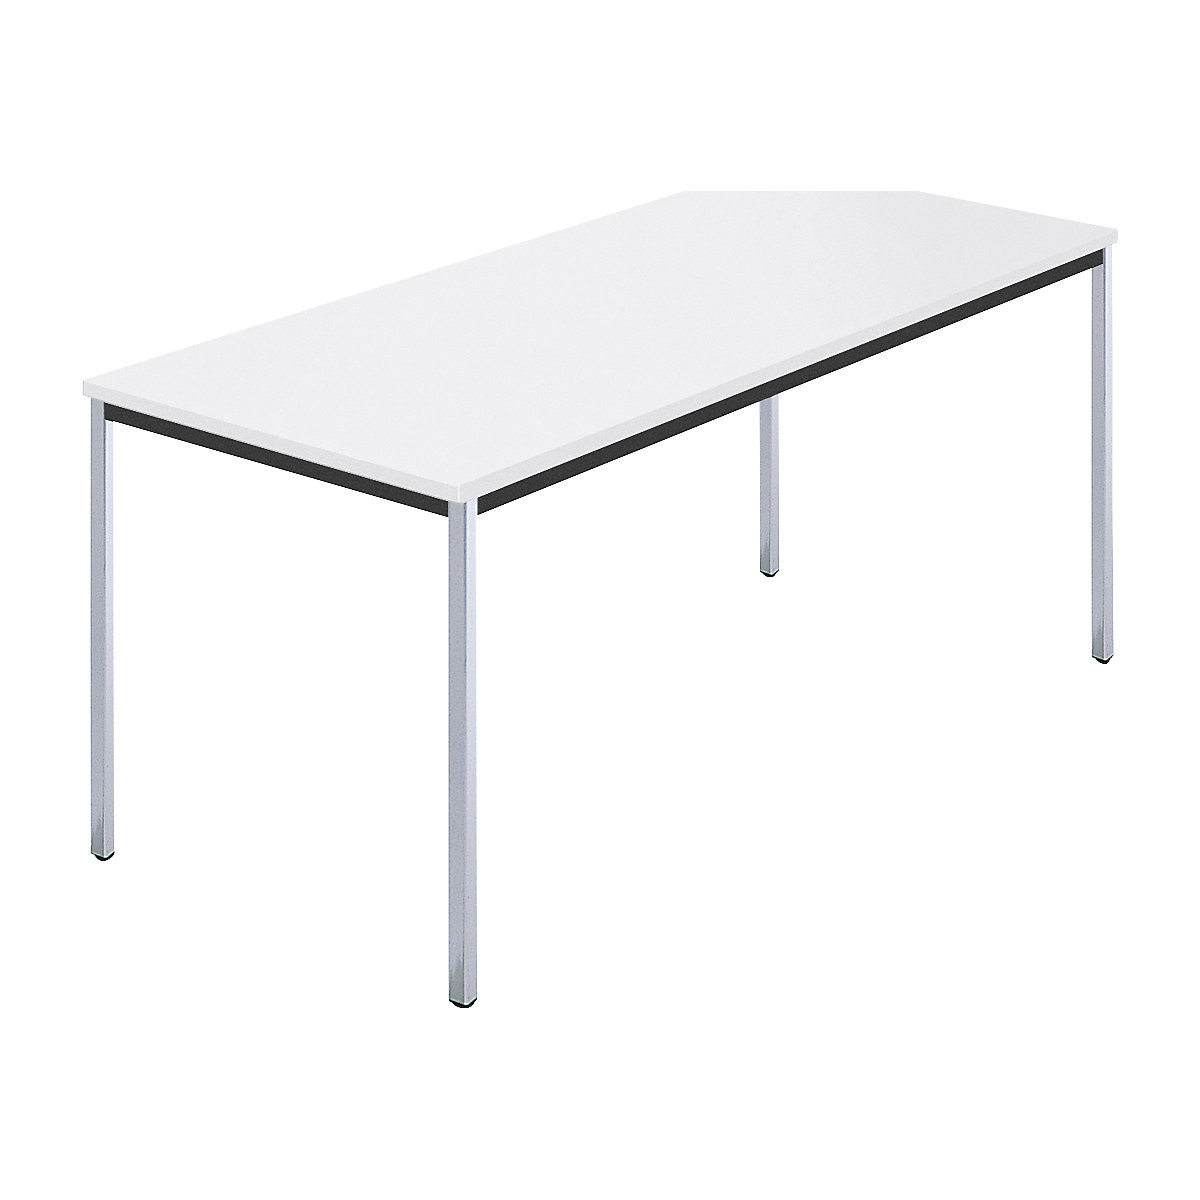 Rectangular table, square tubular steel chrome plated